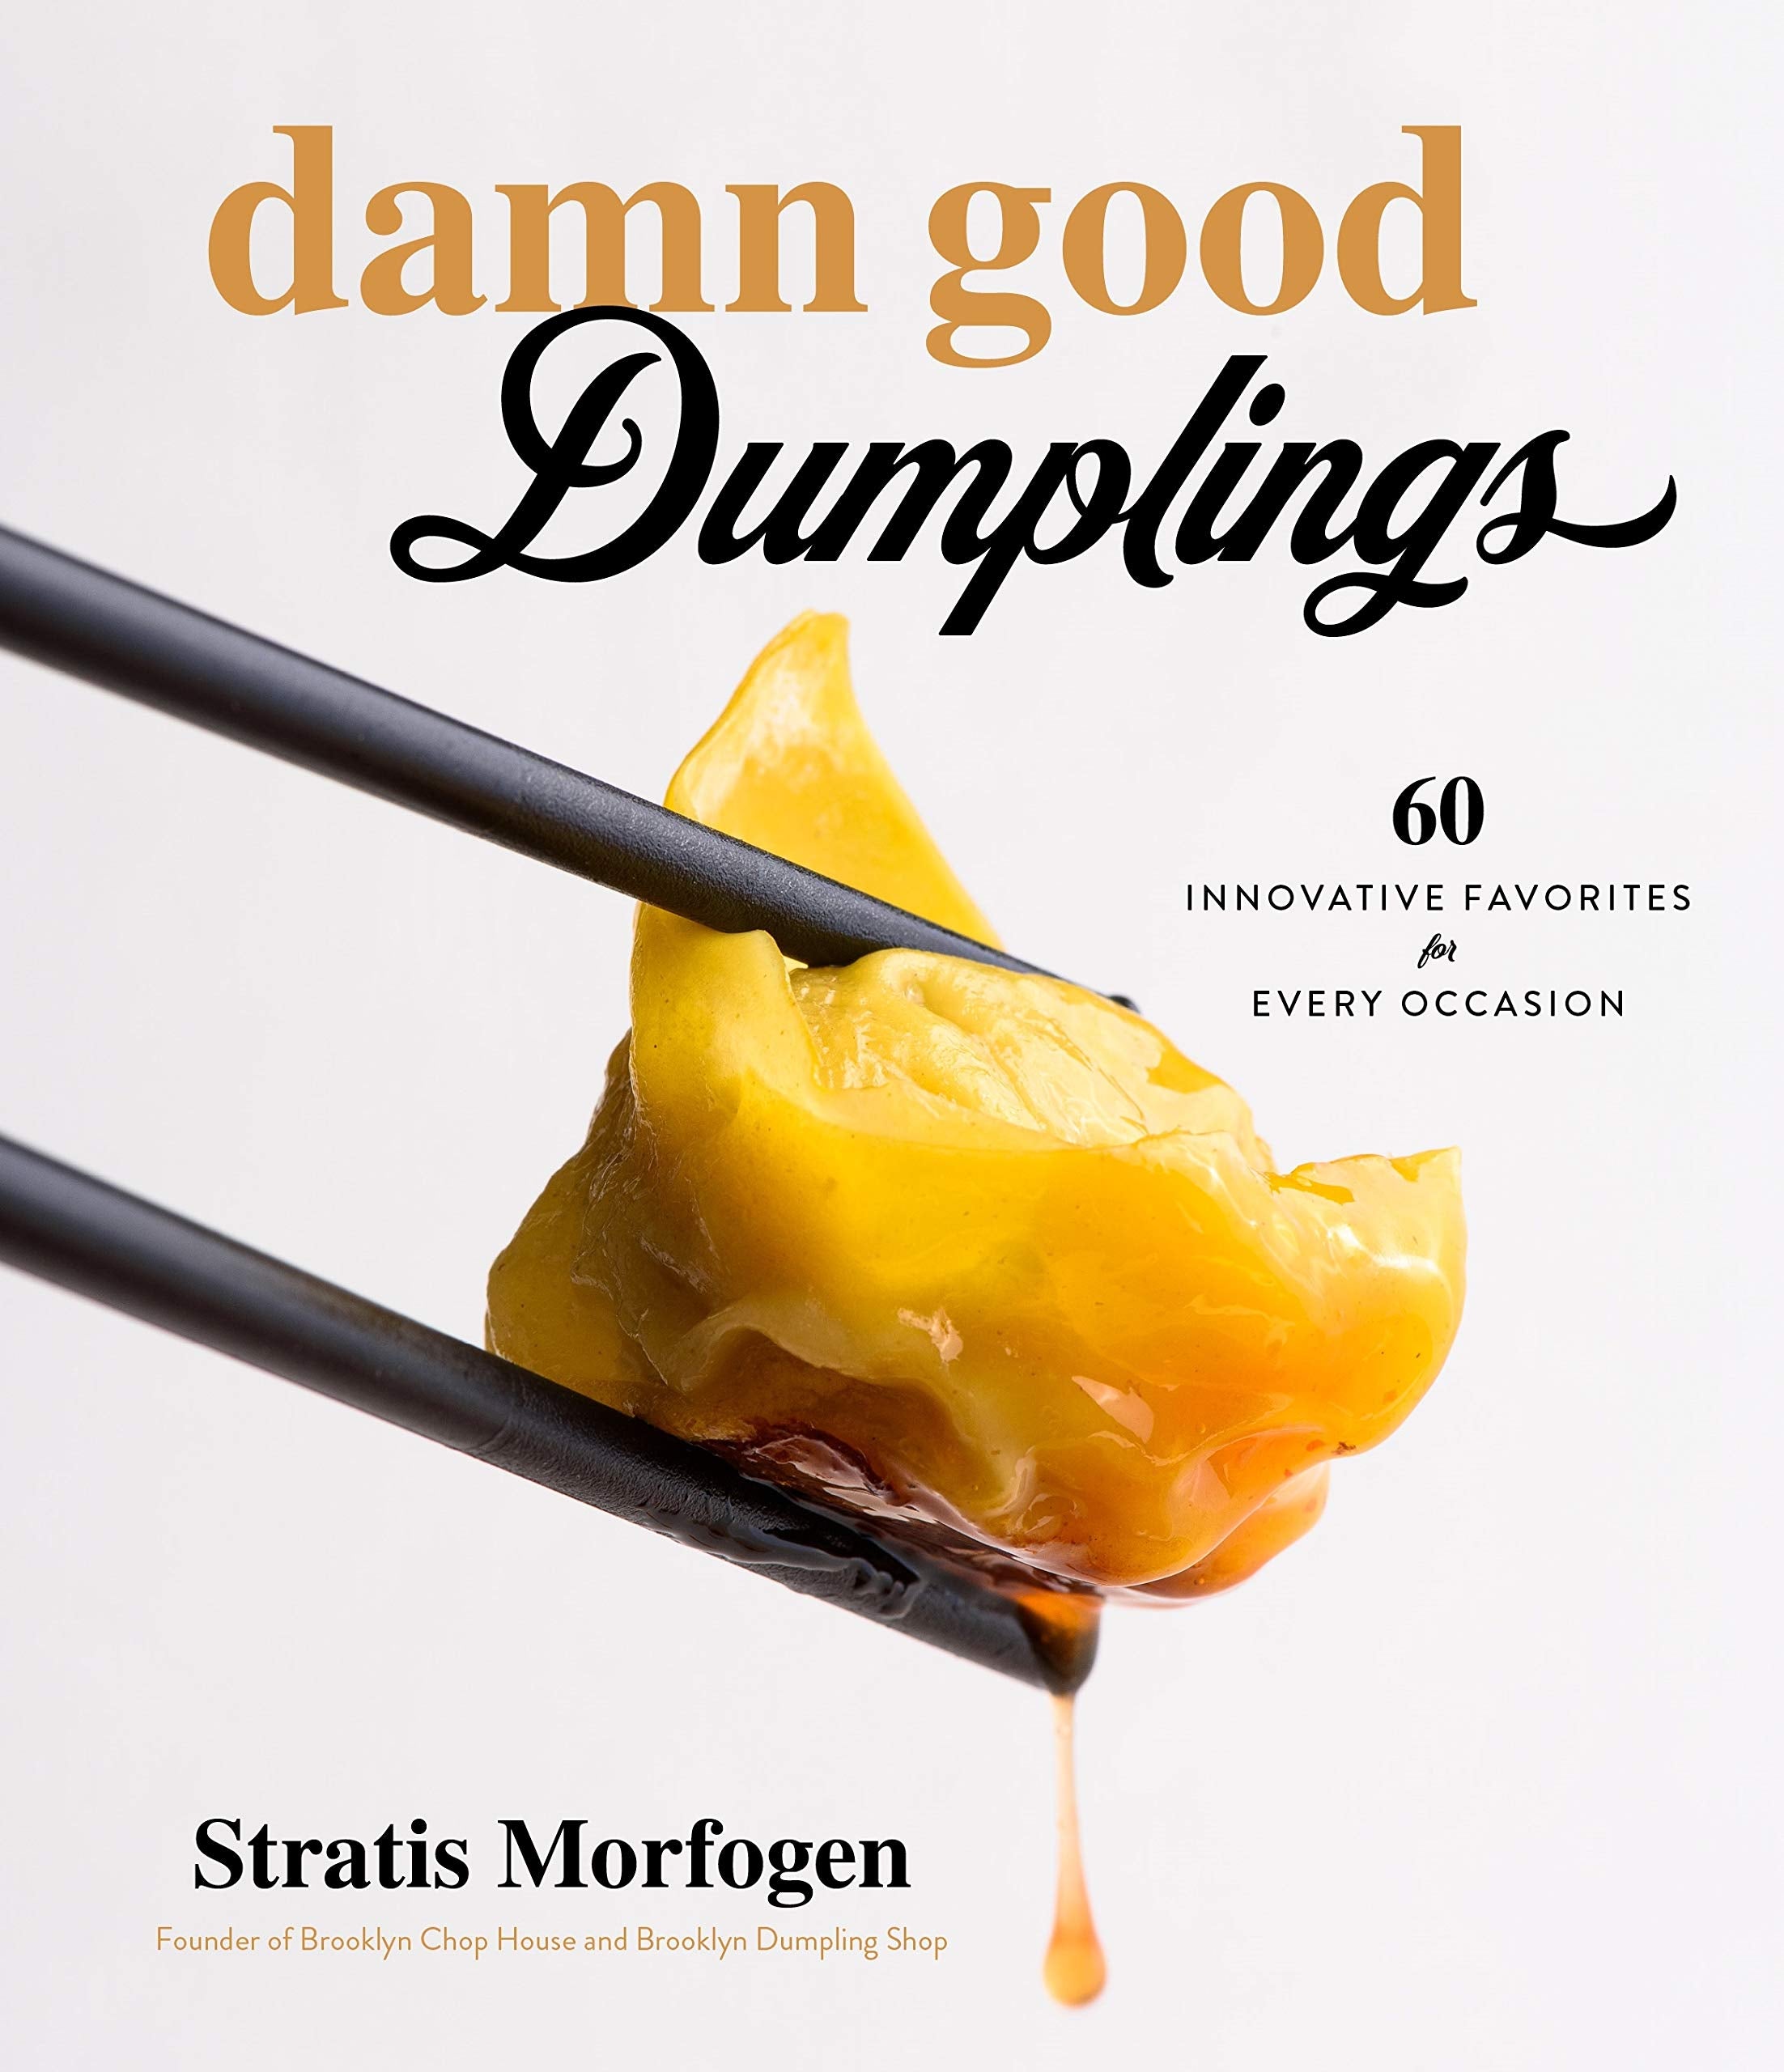 Damn Good Dumplings: 60 Innovative Favorites for Every Occasion (Stratis Morfogen)